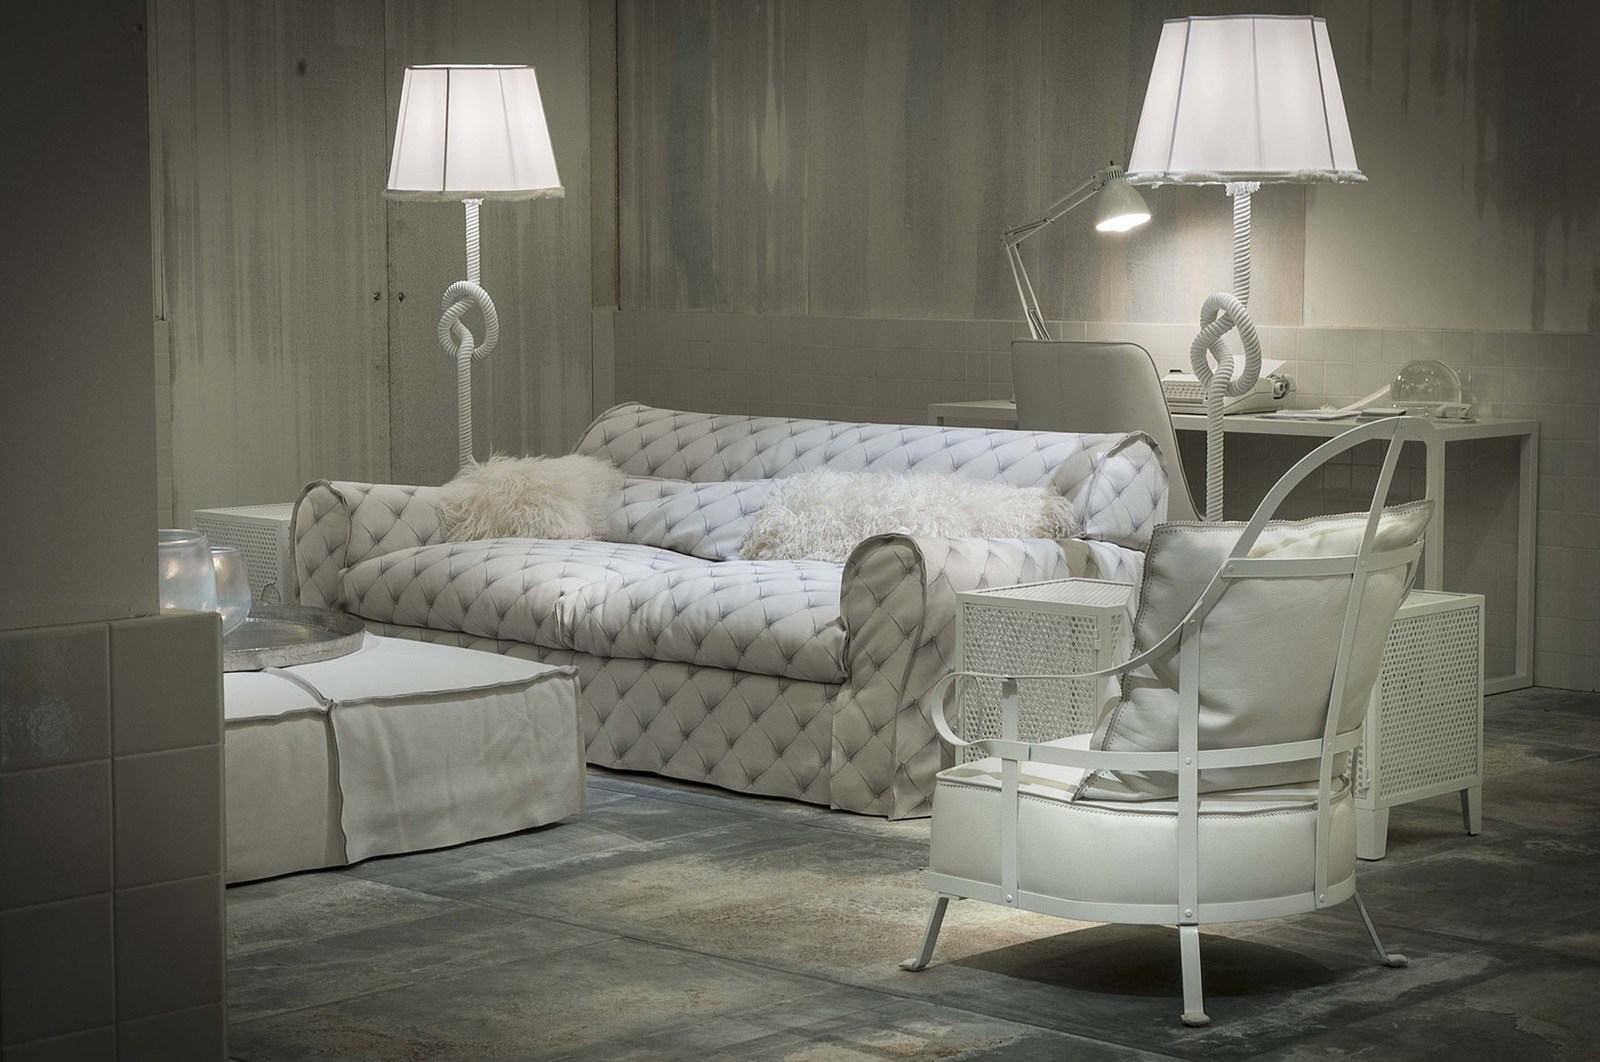 paola-navone-designs-white-fairy-tale-interiors-latest-furniture-baxter-6.jpg